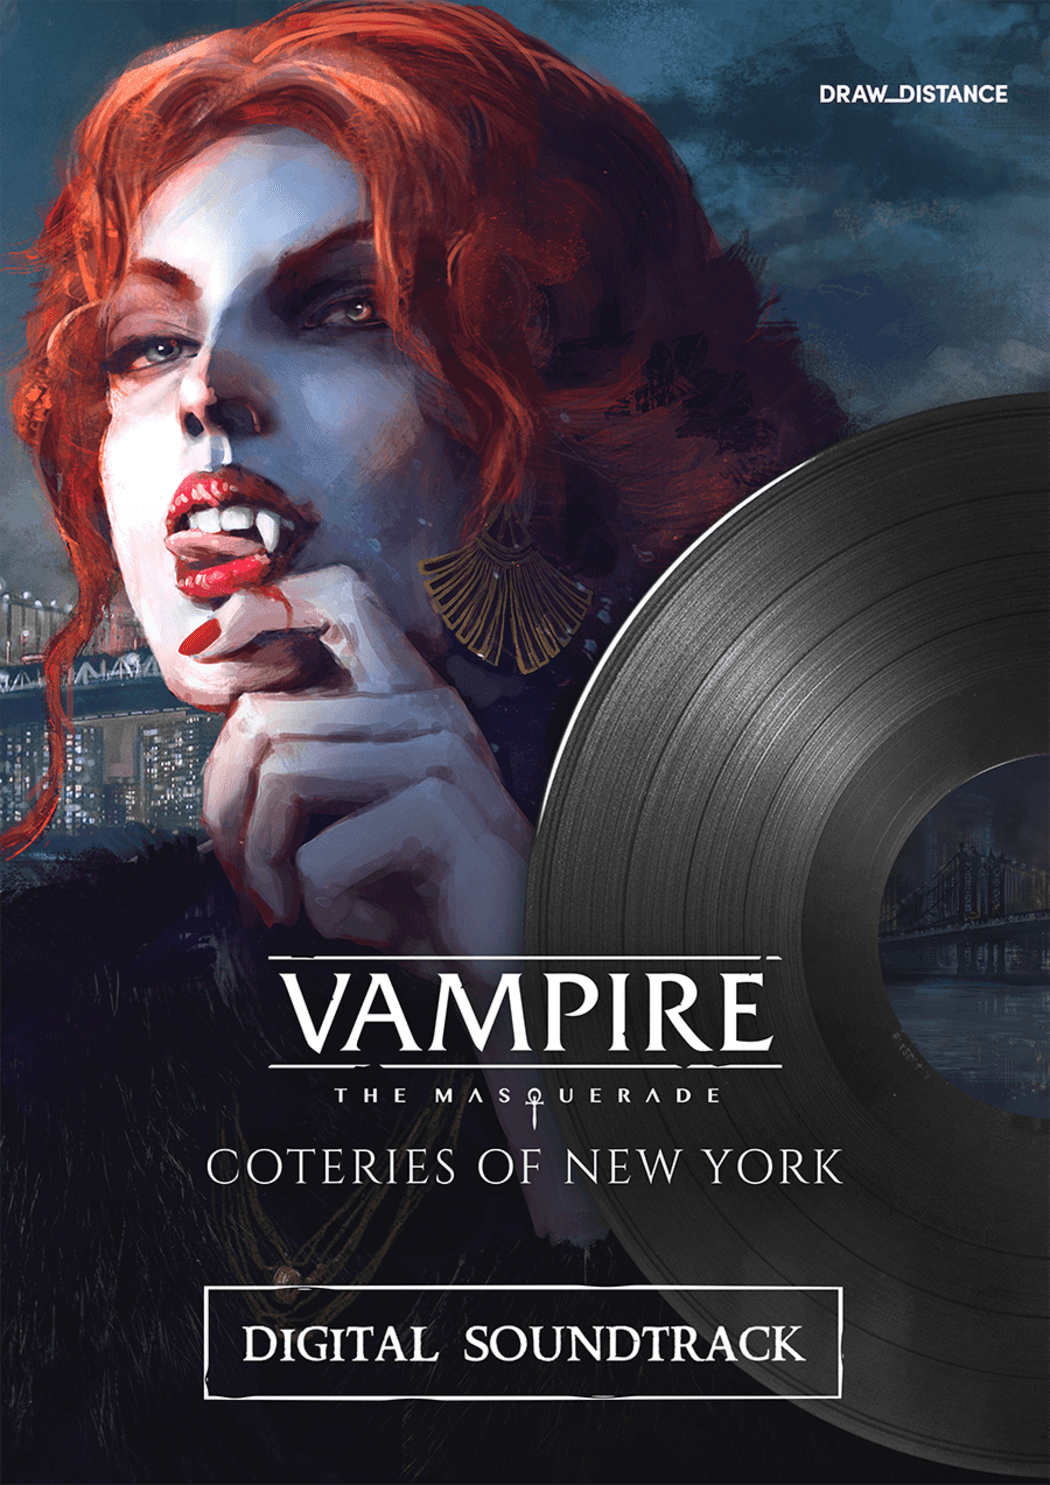 Steam Community :: Guide :: Vampire: The Masquerade - Coteries of New York